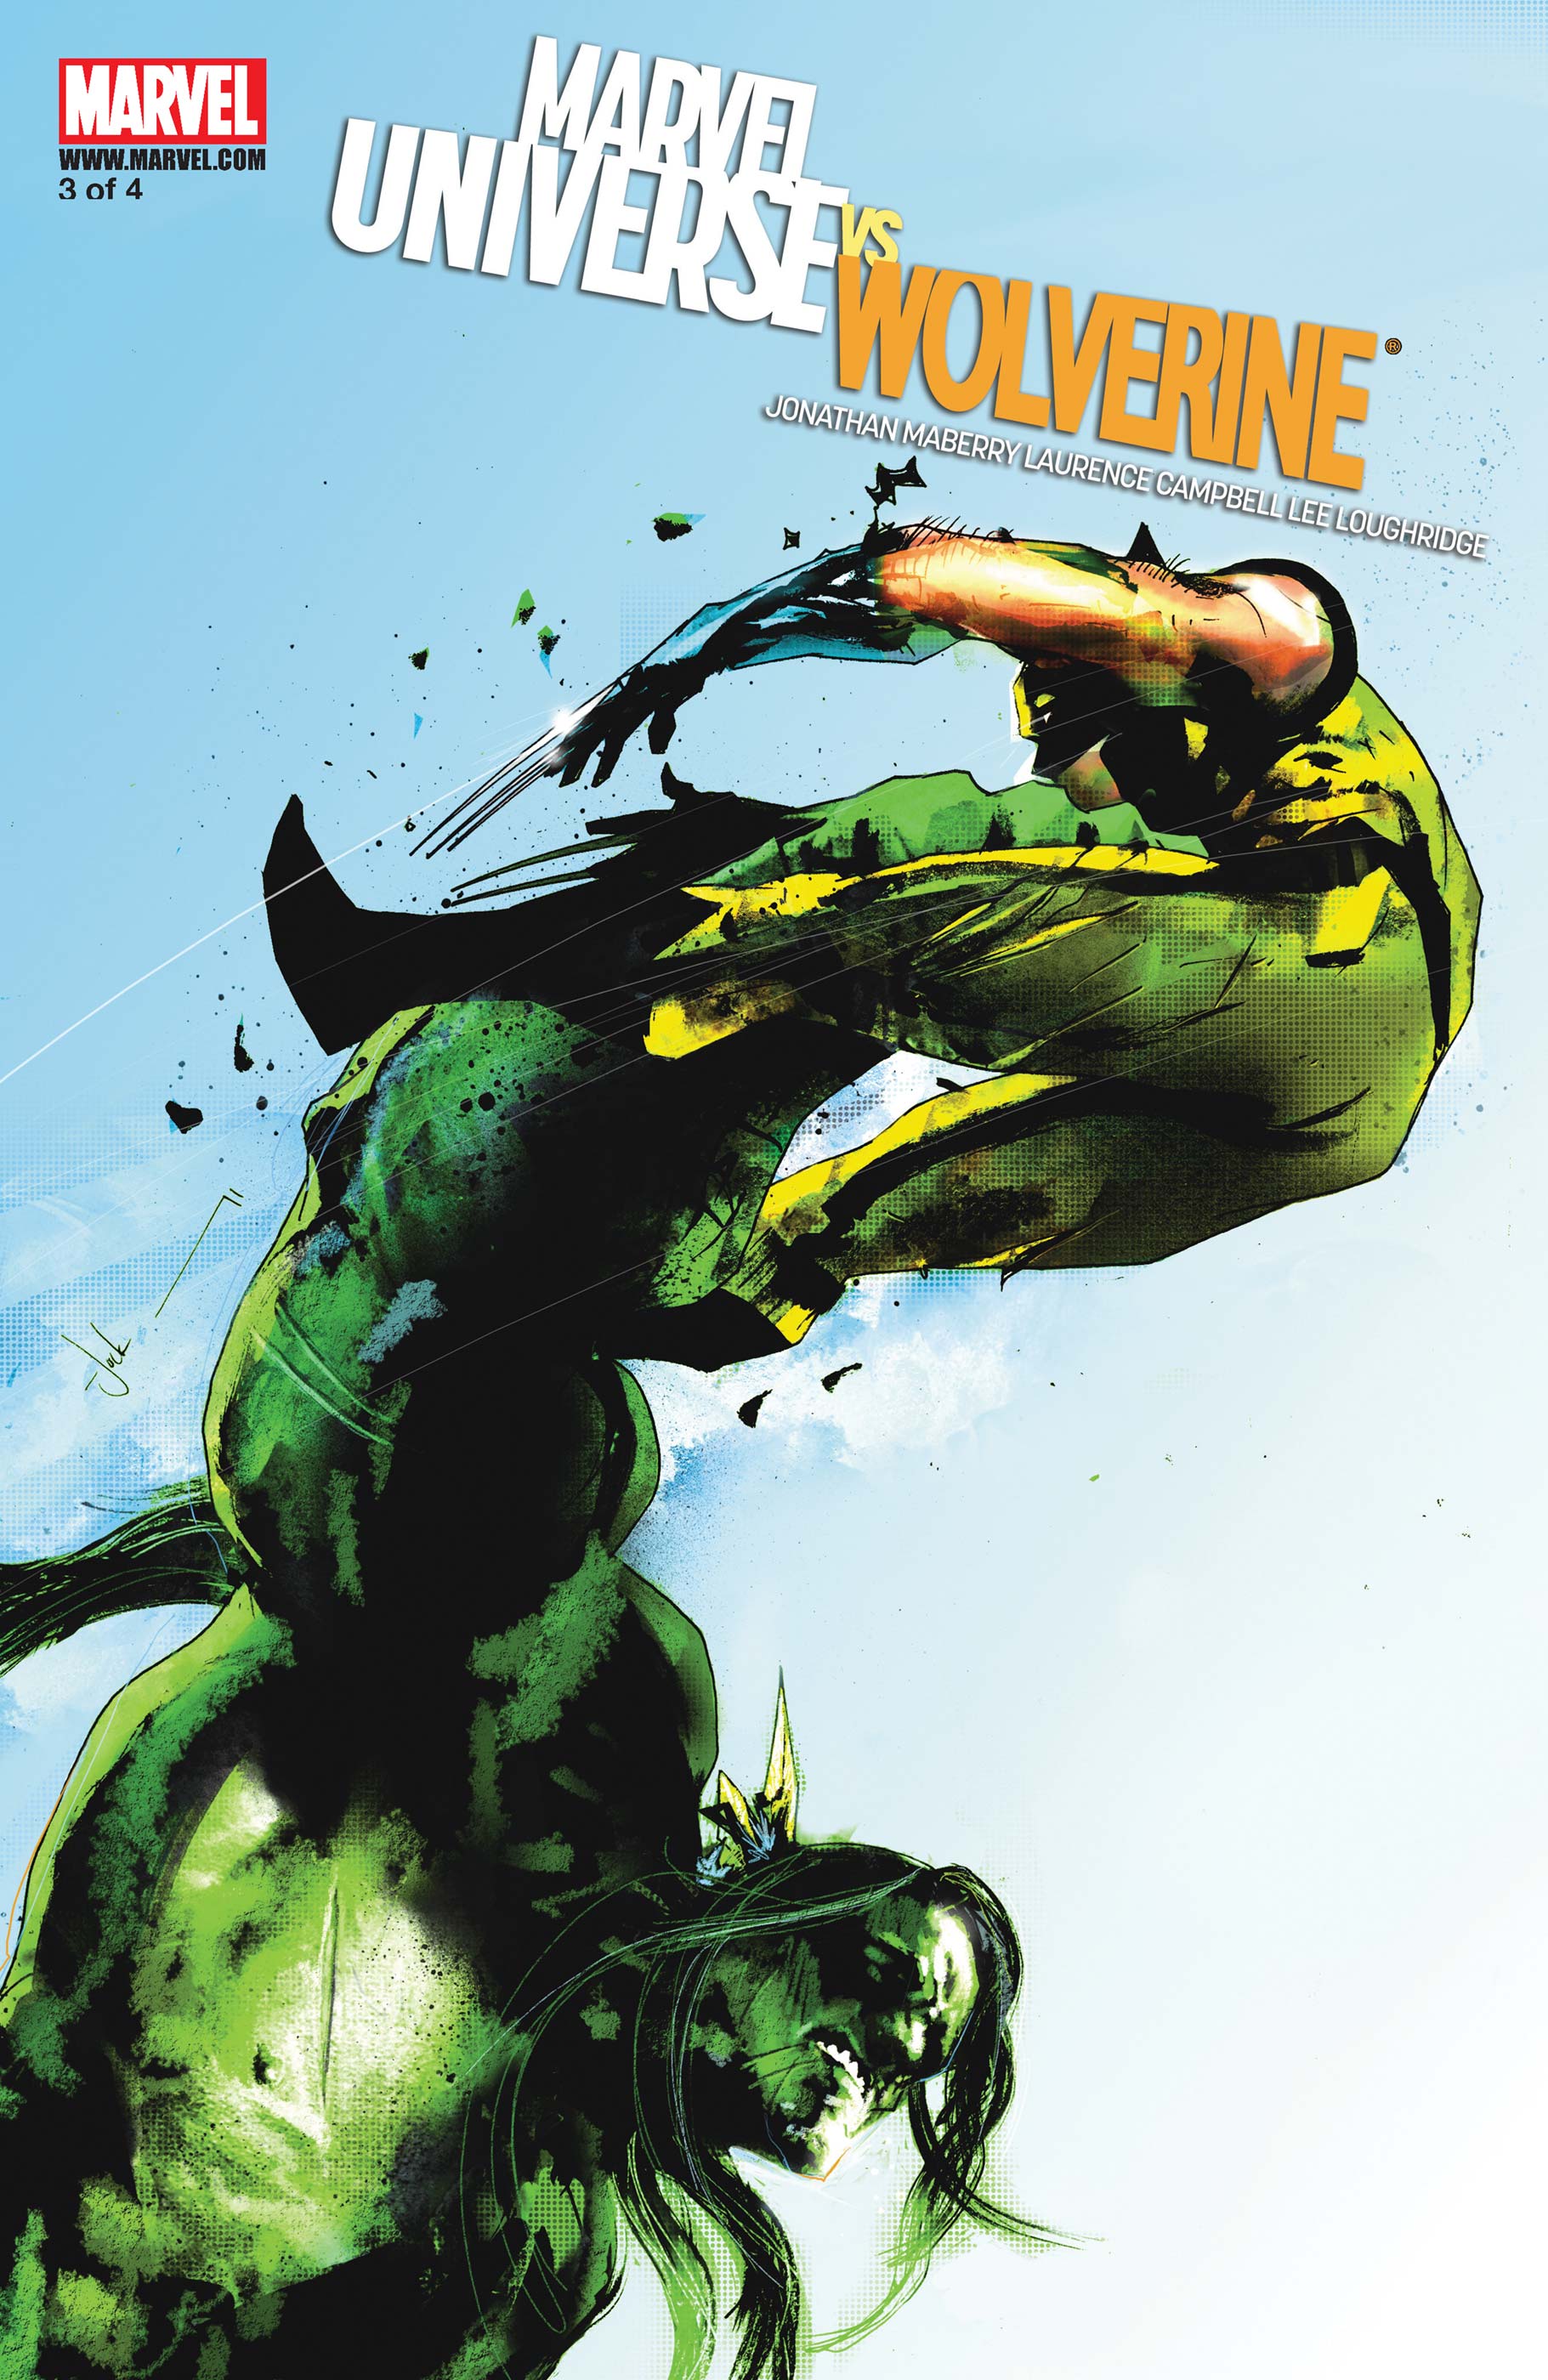 Marvel Universe Vs. Wolverine (2011) #3